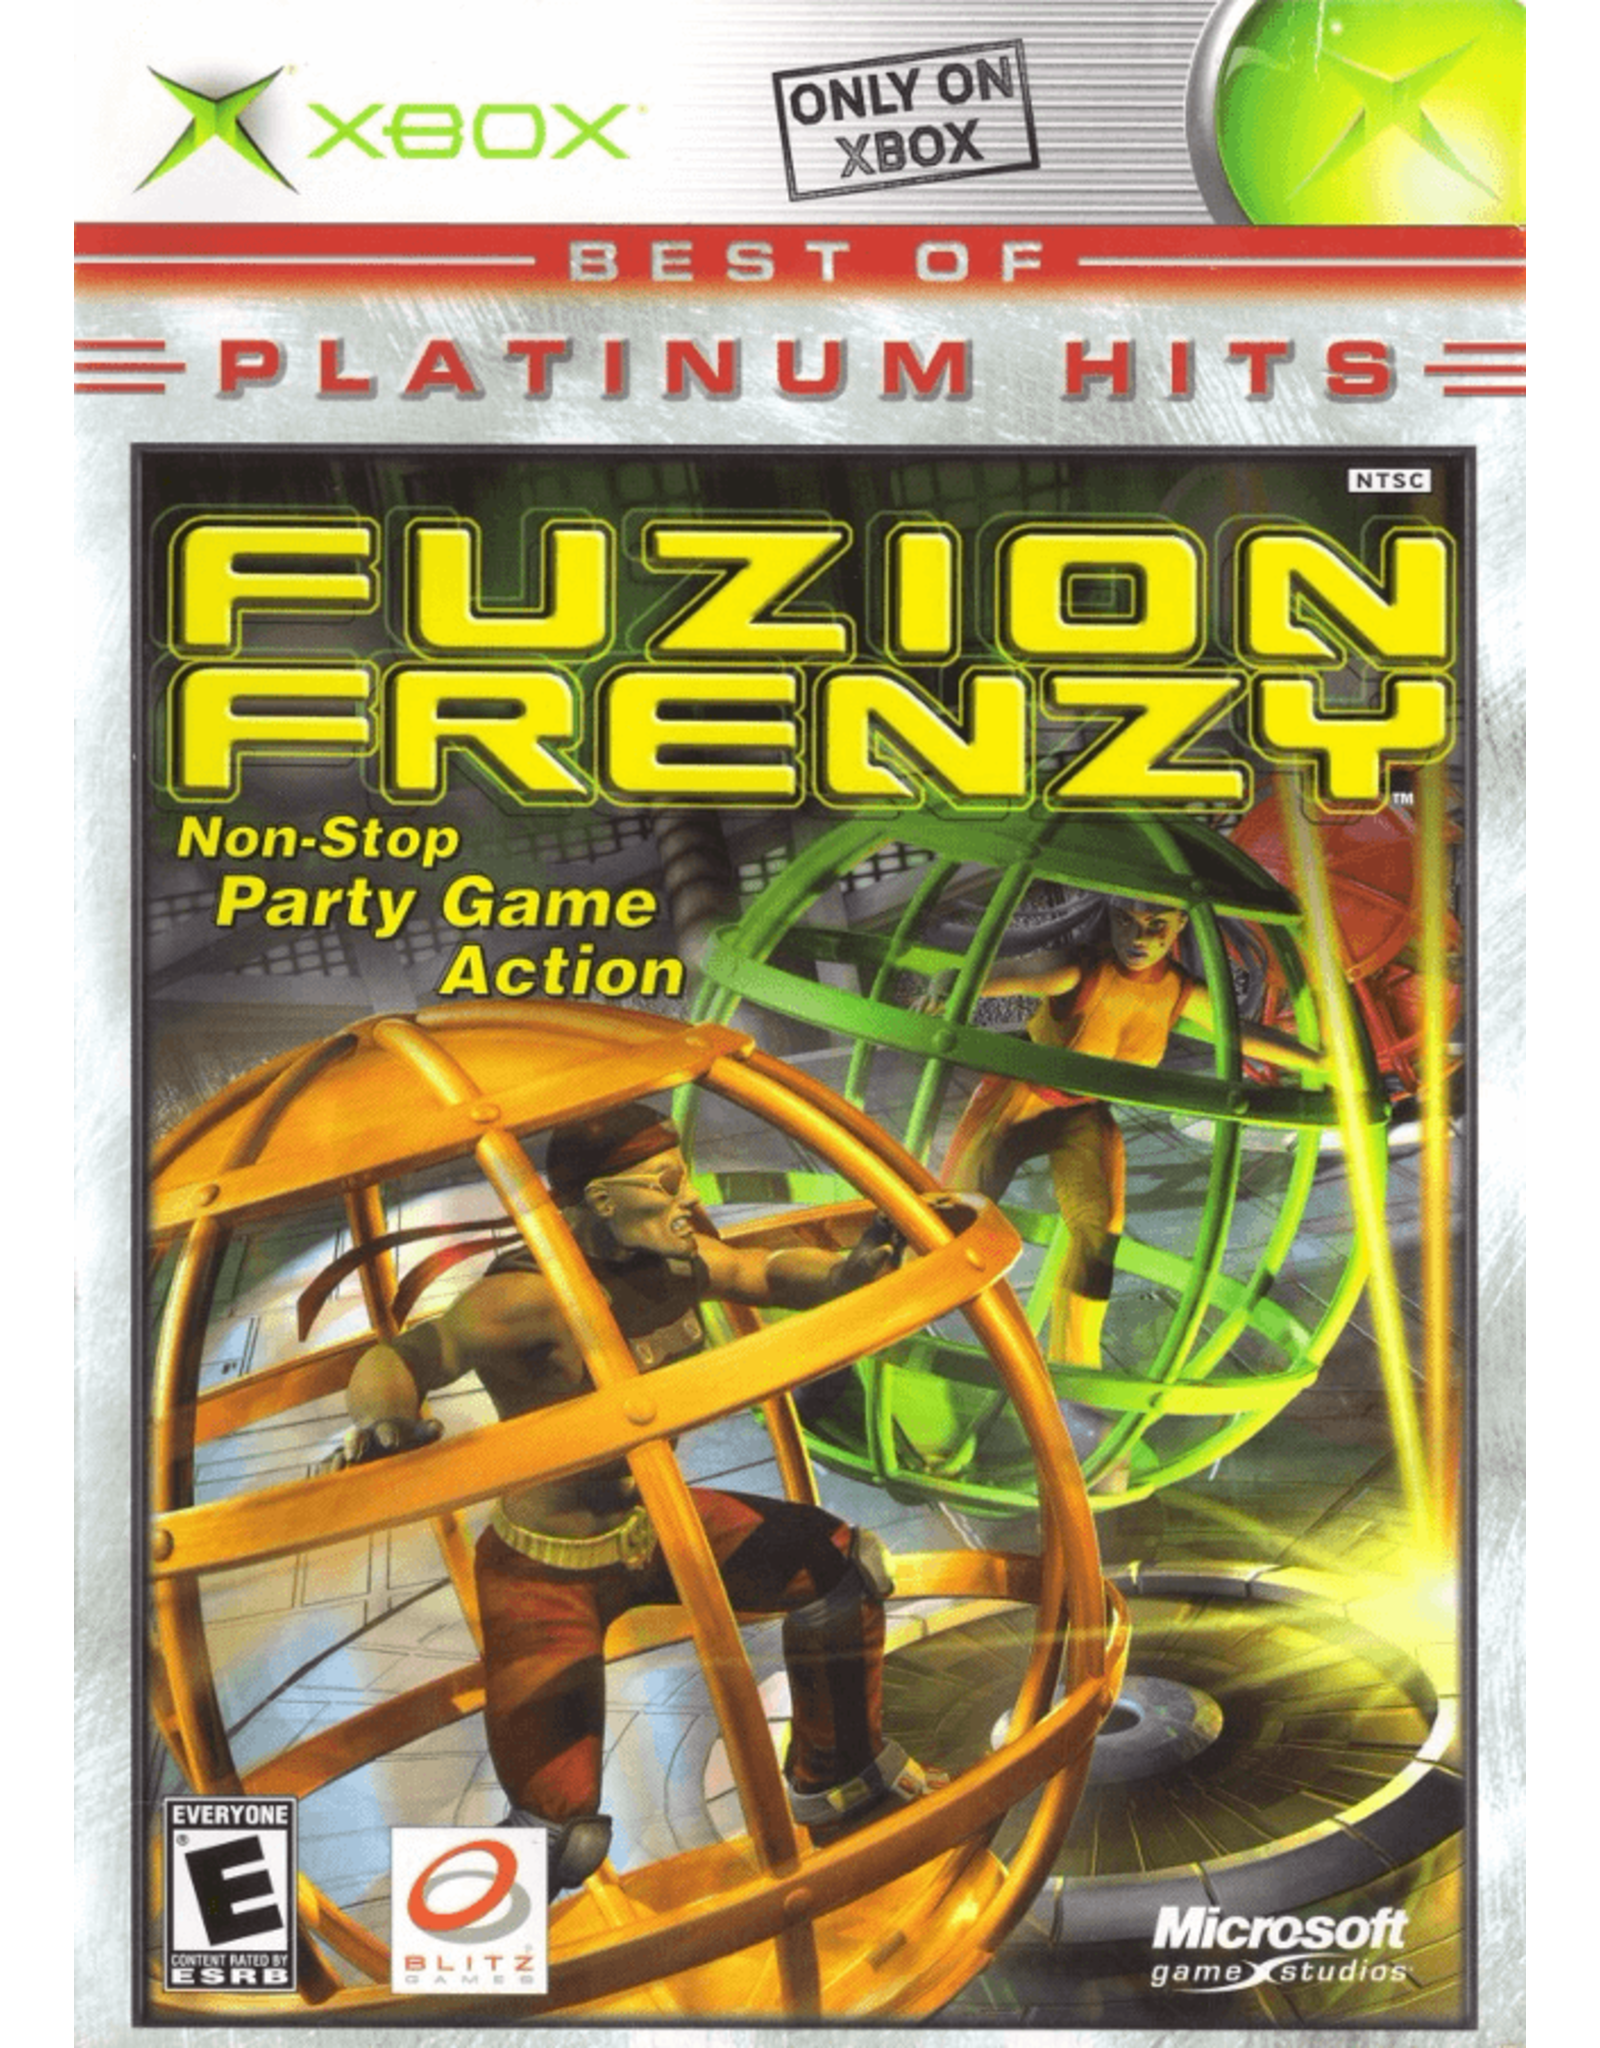 Xbox Fuzion Frenzy (Best of Platinum Hits, CiB)